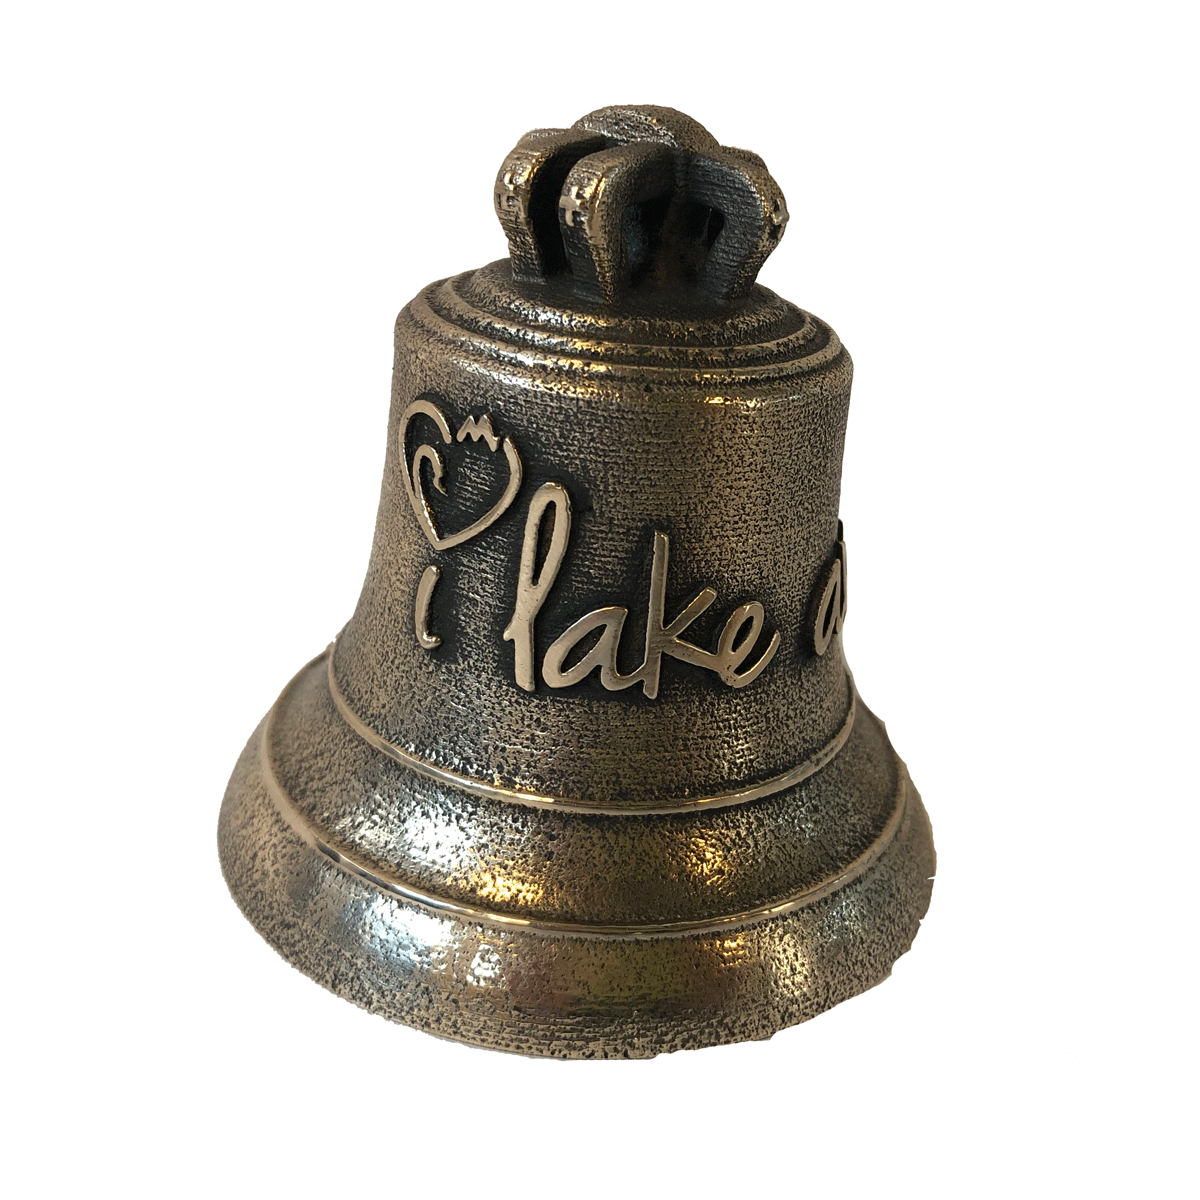 Cloche miniature en bronze, finition bronze ancien, personnalisation I Lake Annecy